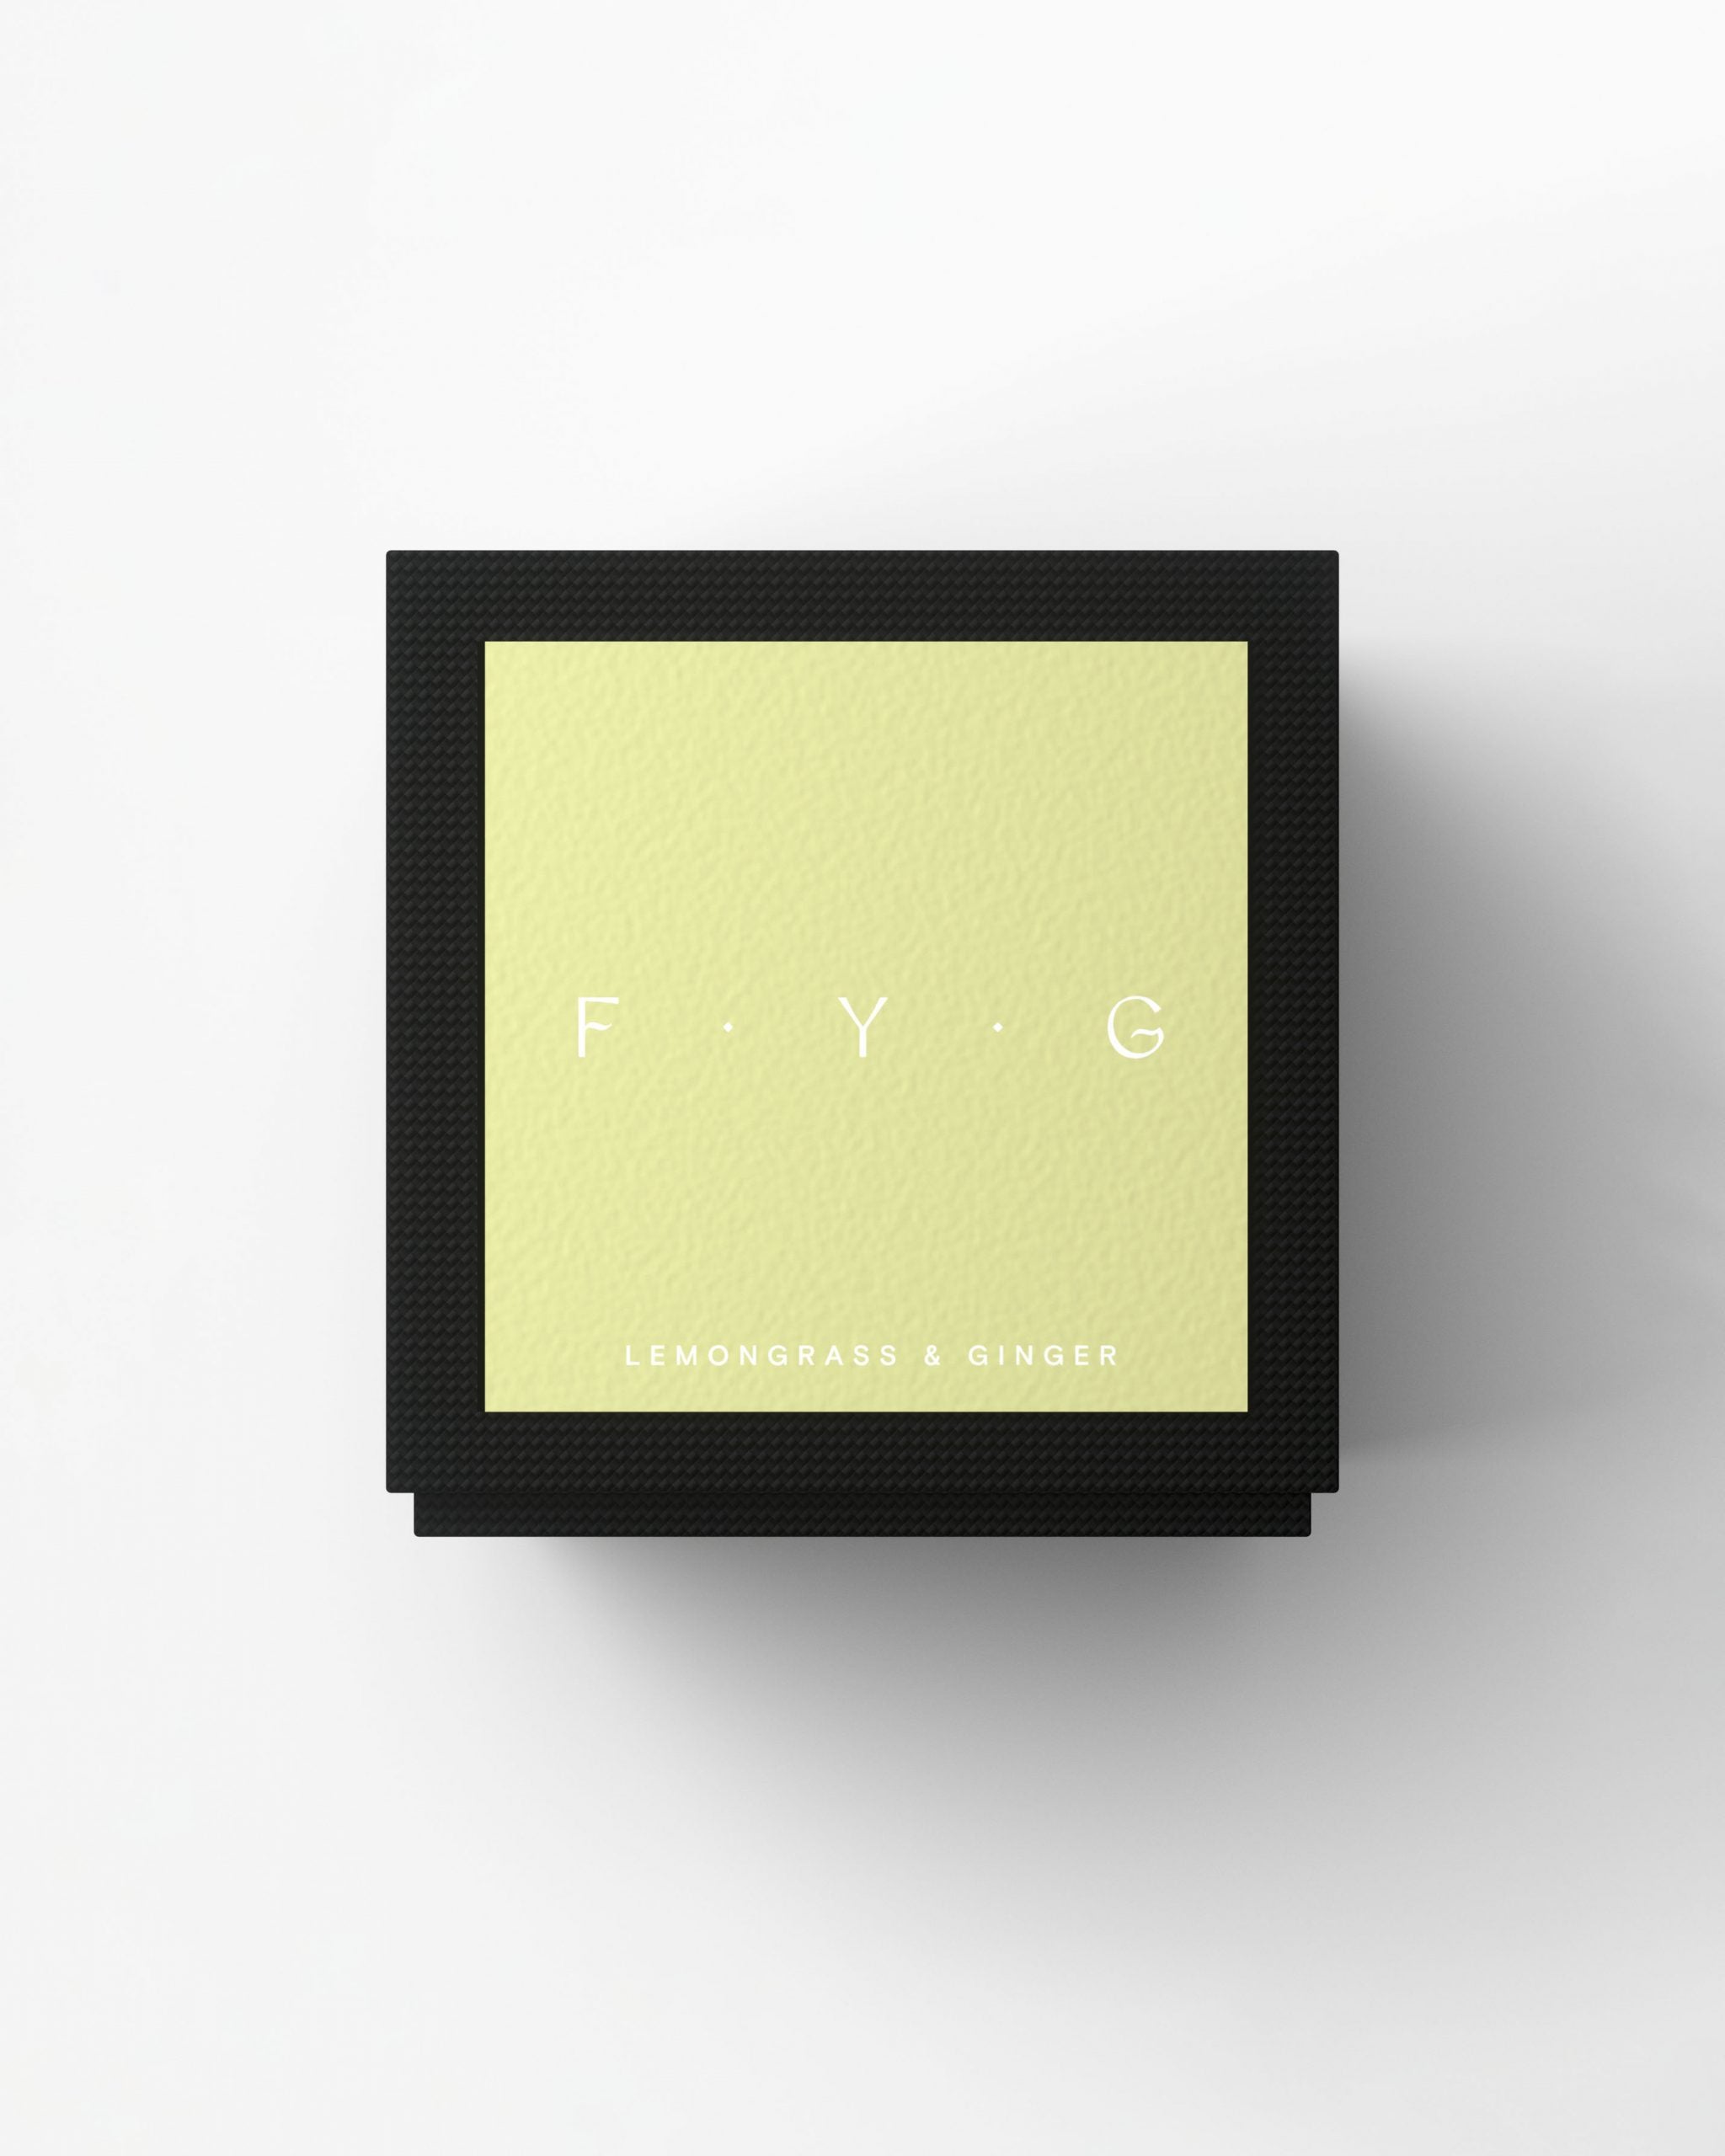 FYG - Lemongrass and Ginger